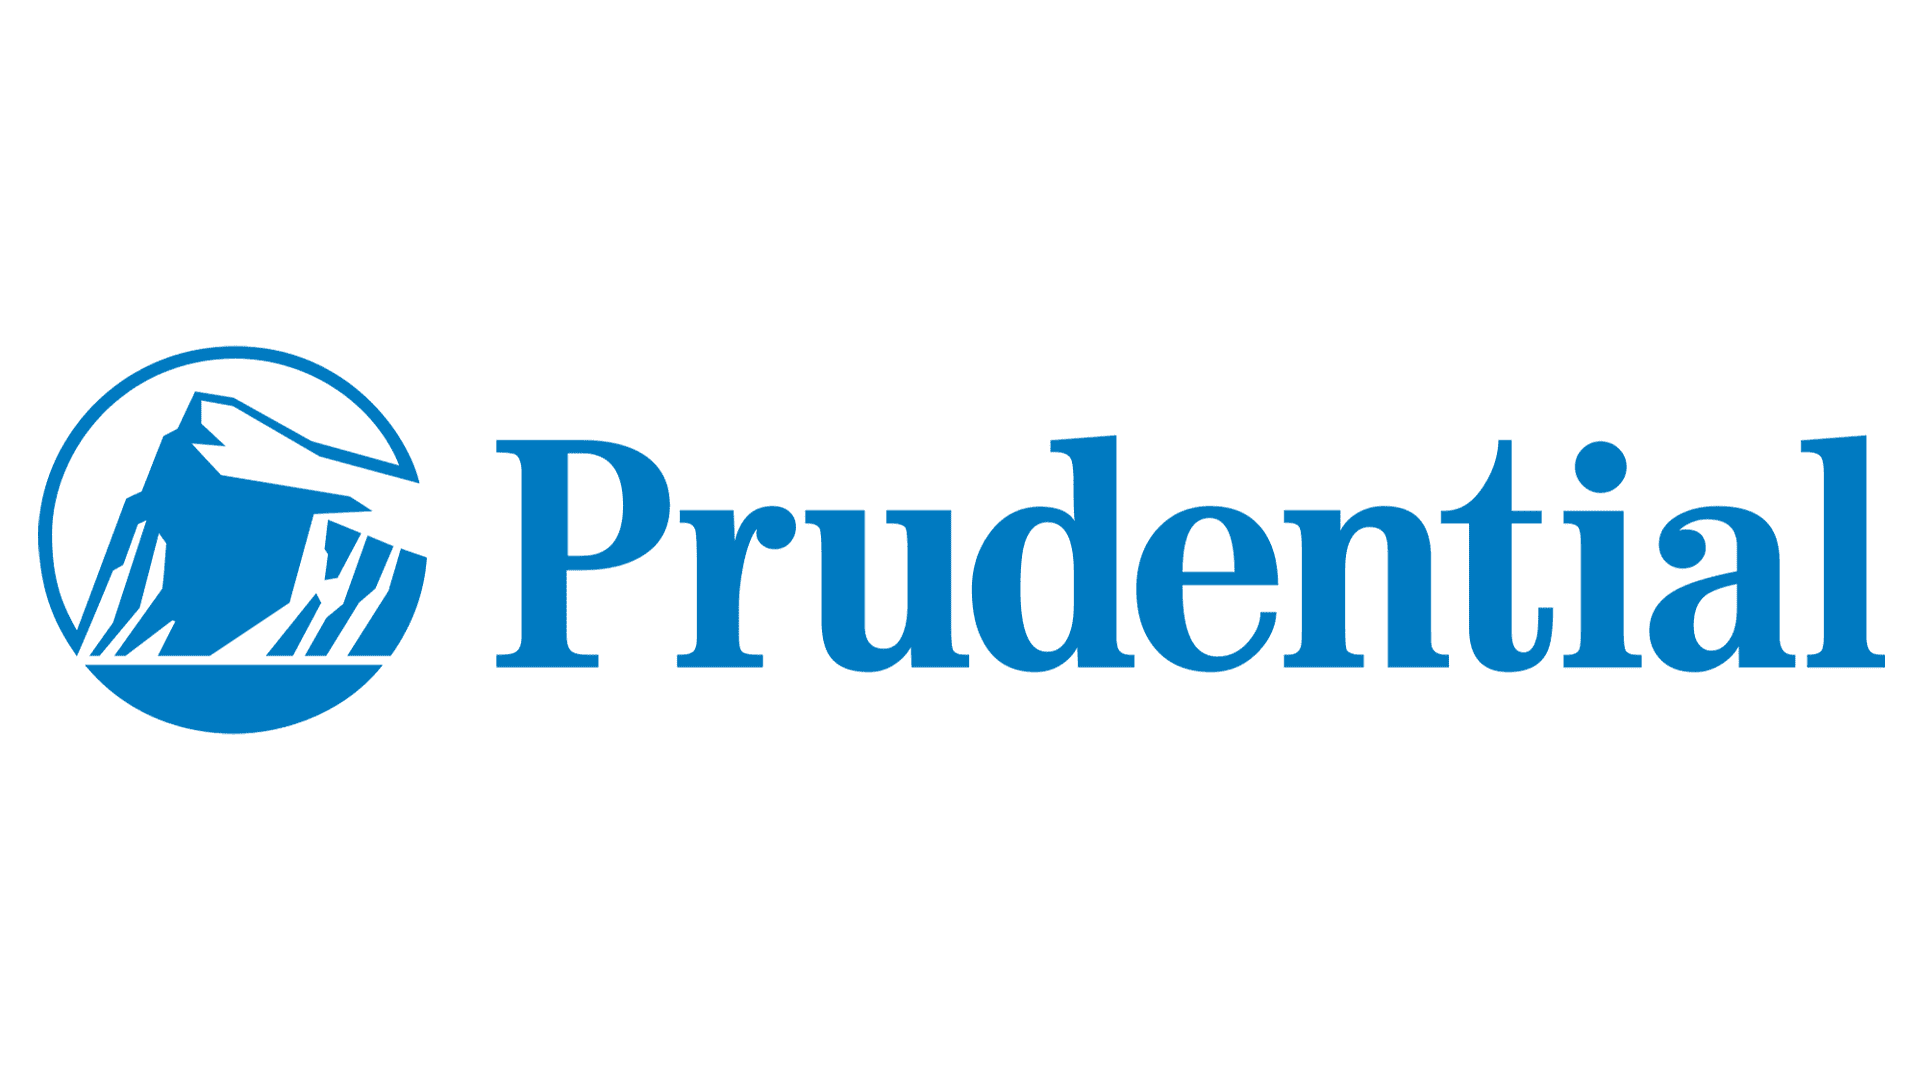 Prudential-Financial-Logo